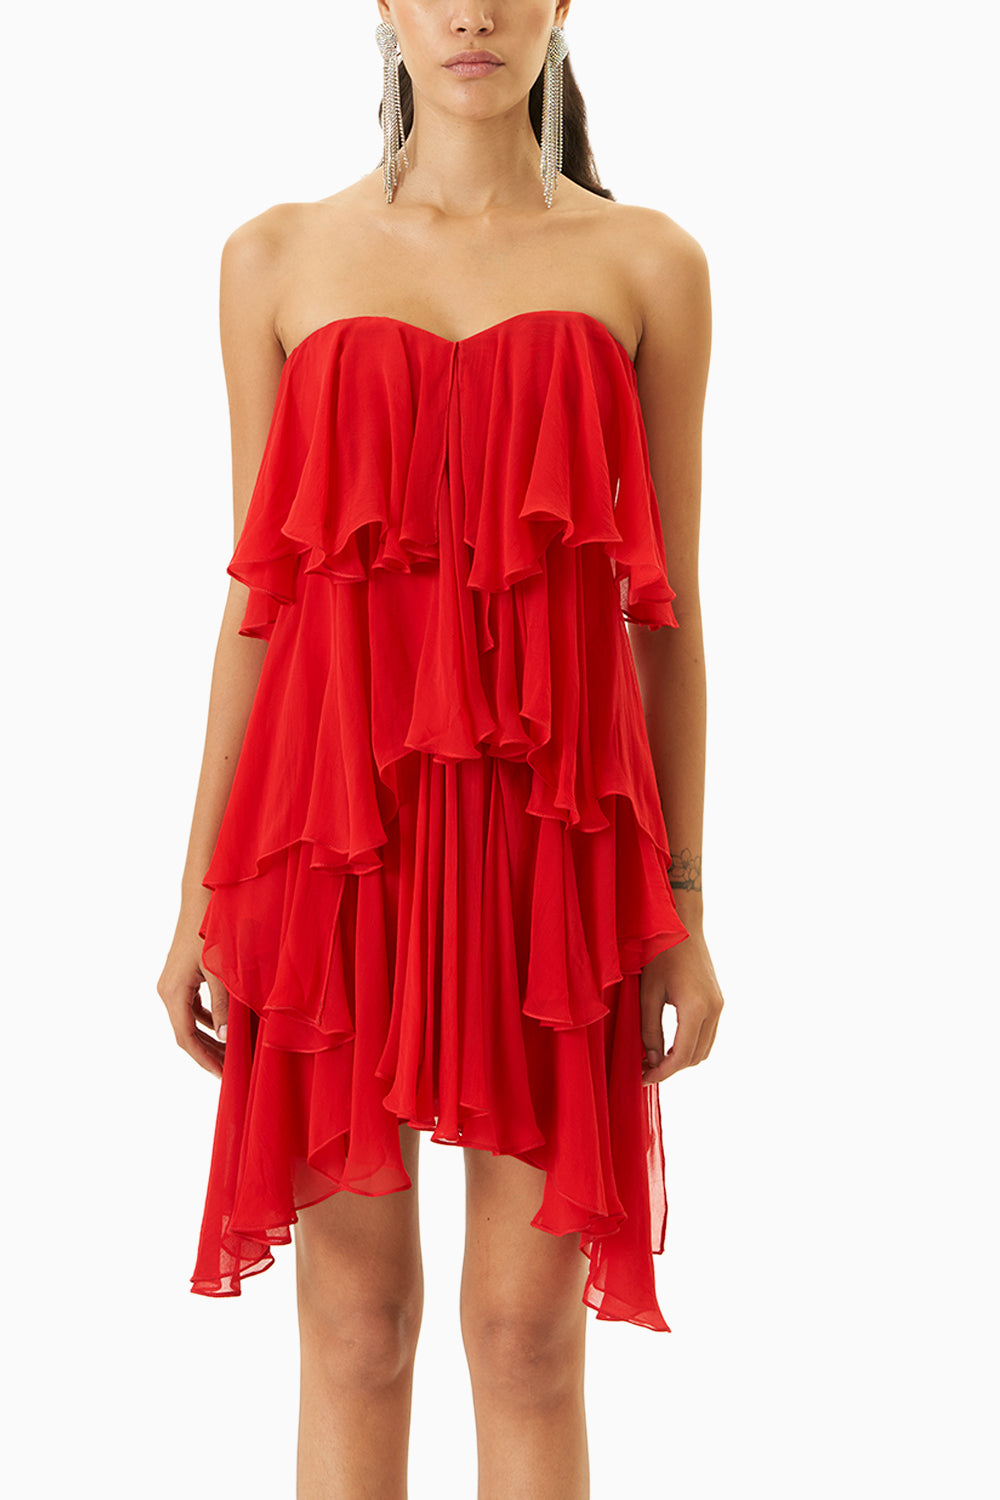 Jazzy Night Red Dress